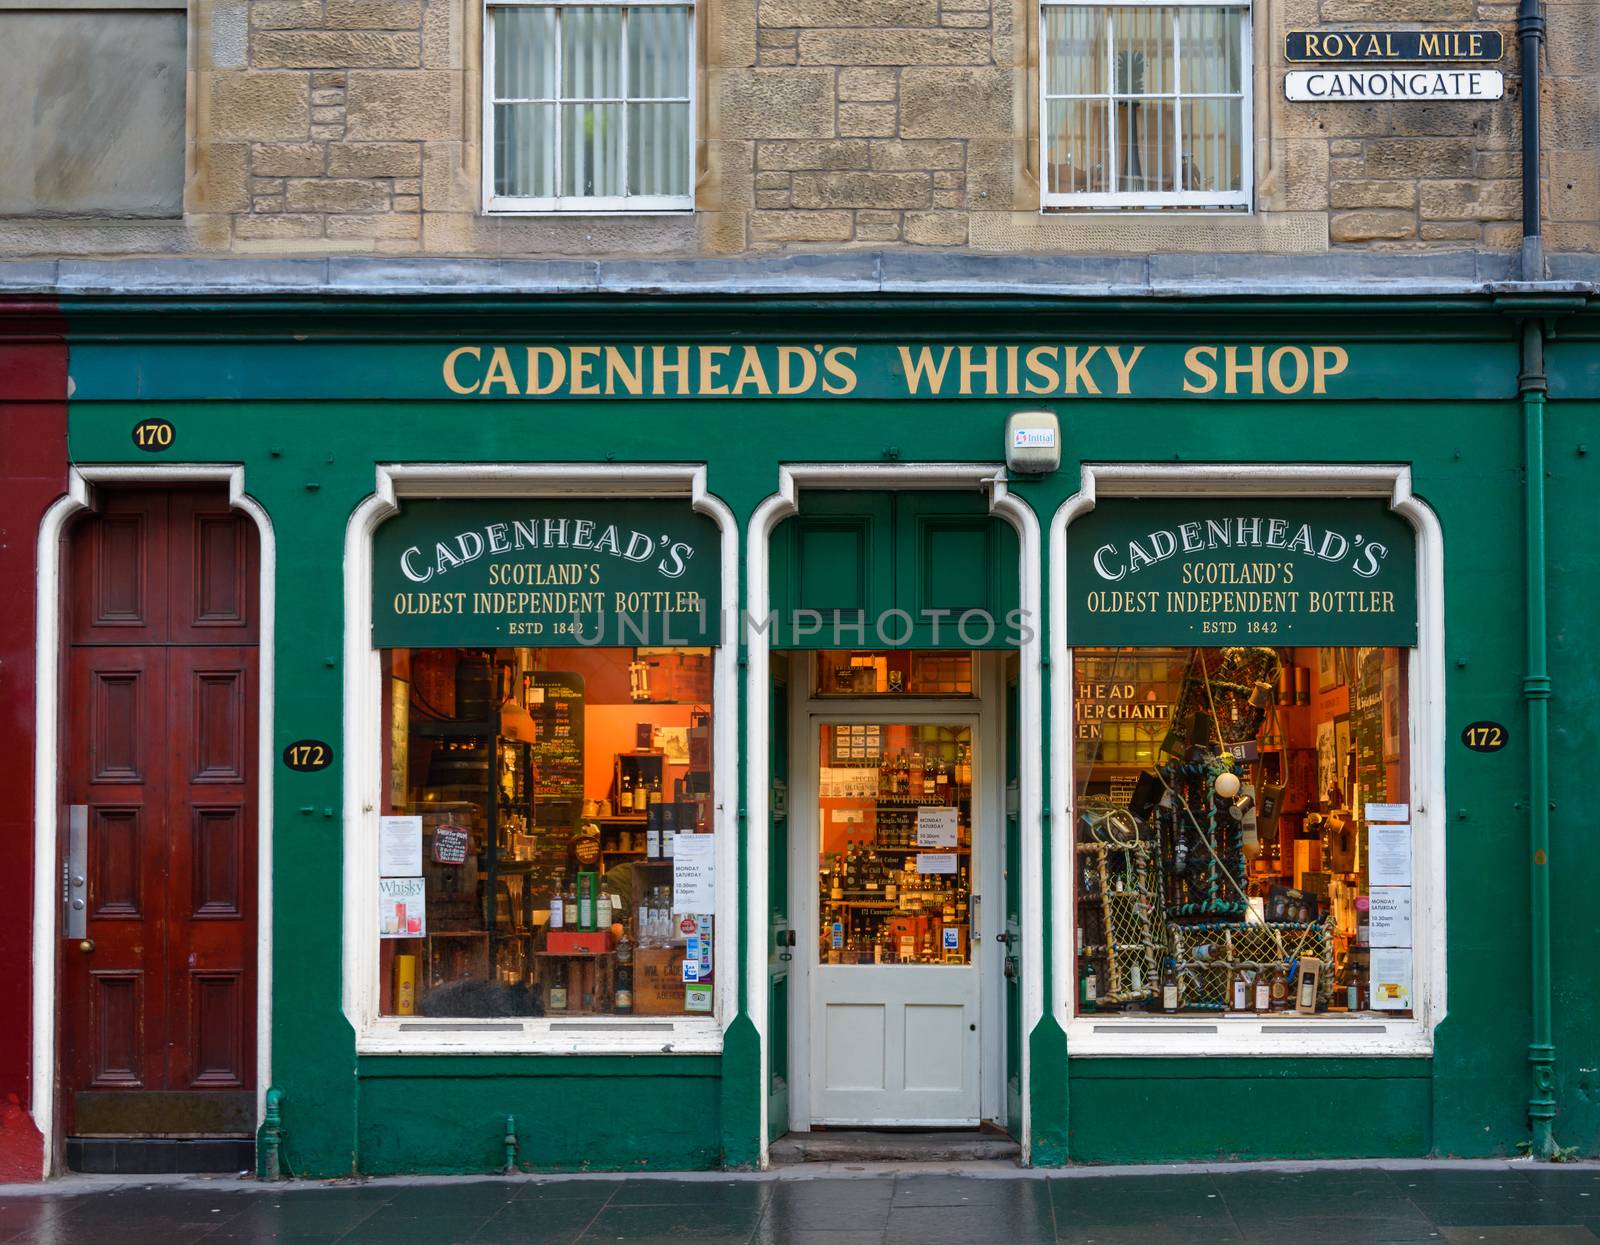 Cadenhead's whisky shop in Edinburgh, Scotland by dutourdumonde